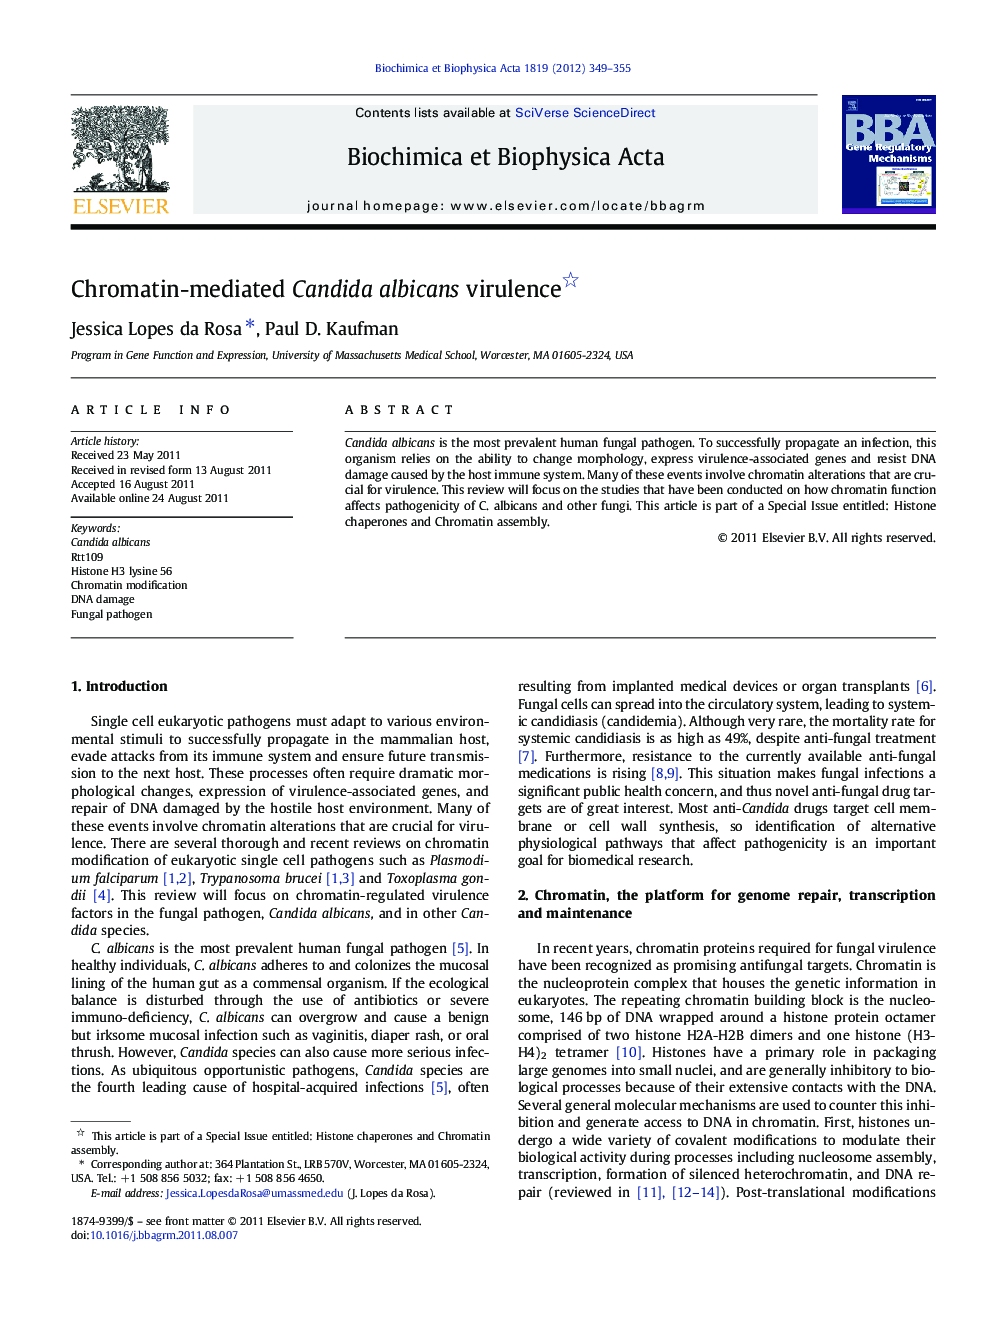 Chromatin-mediated Candida albicans virulence 